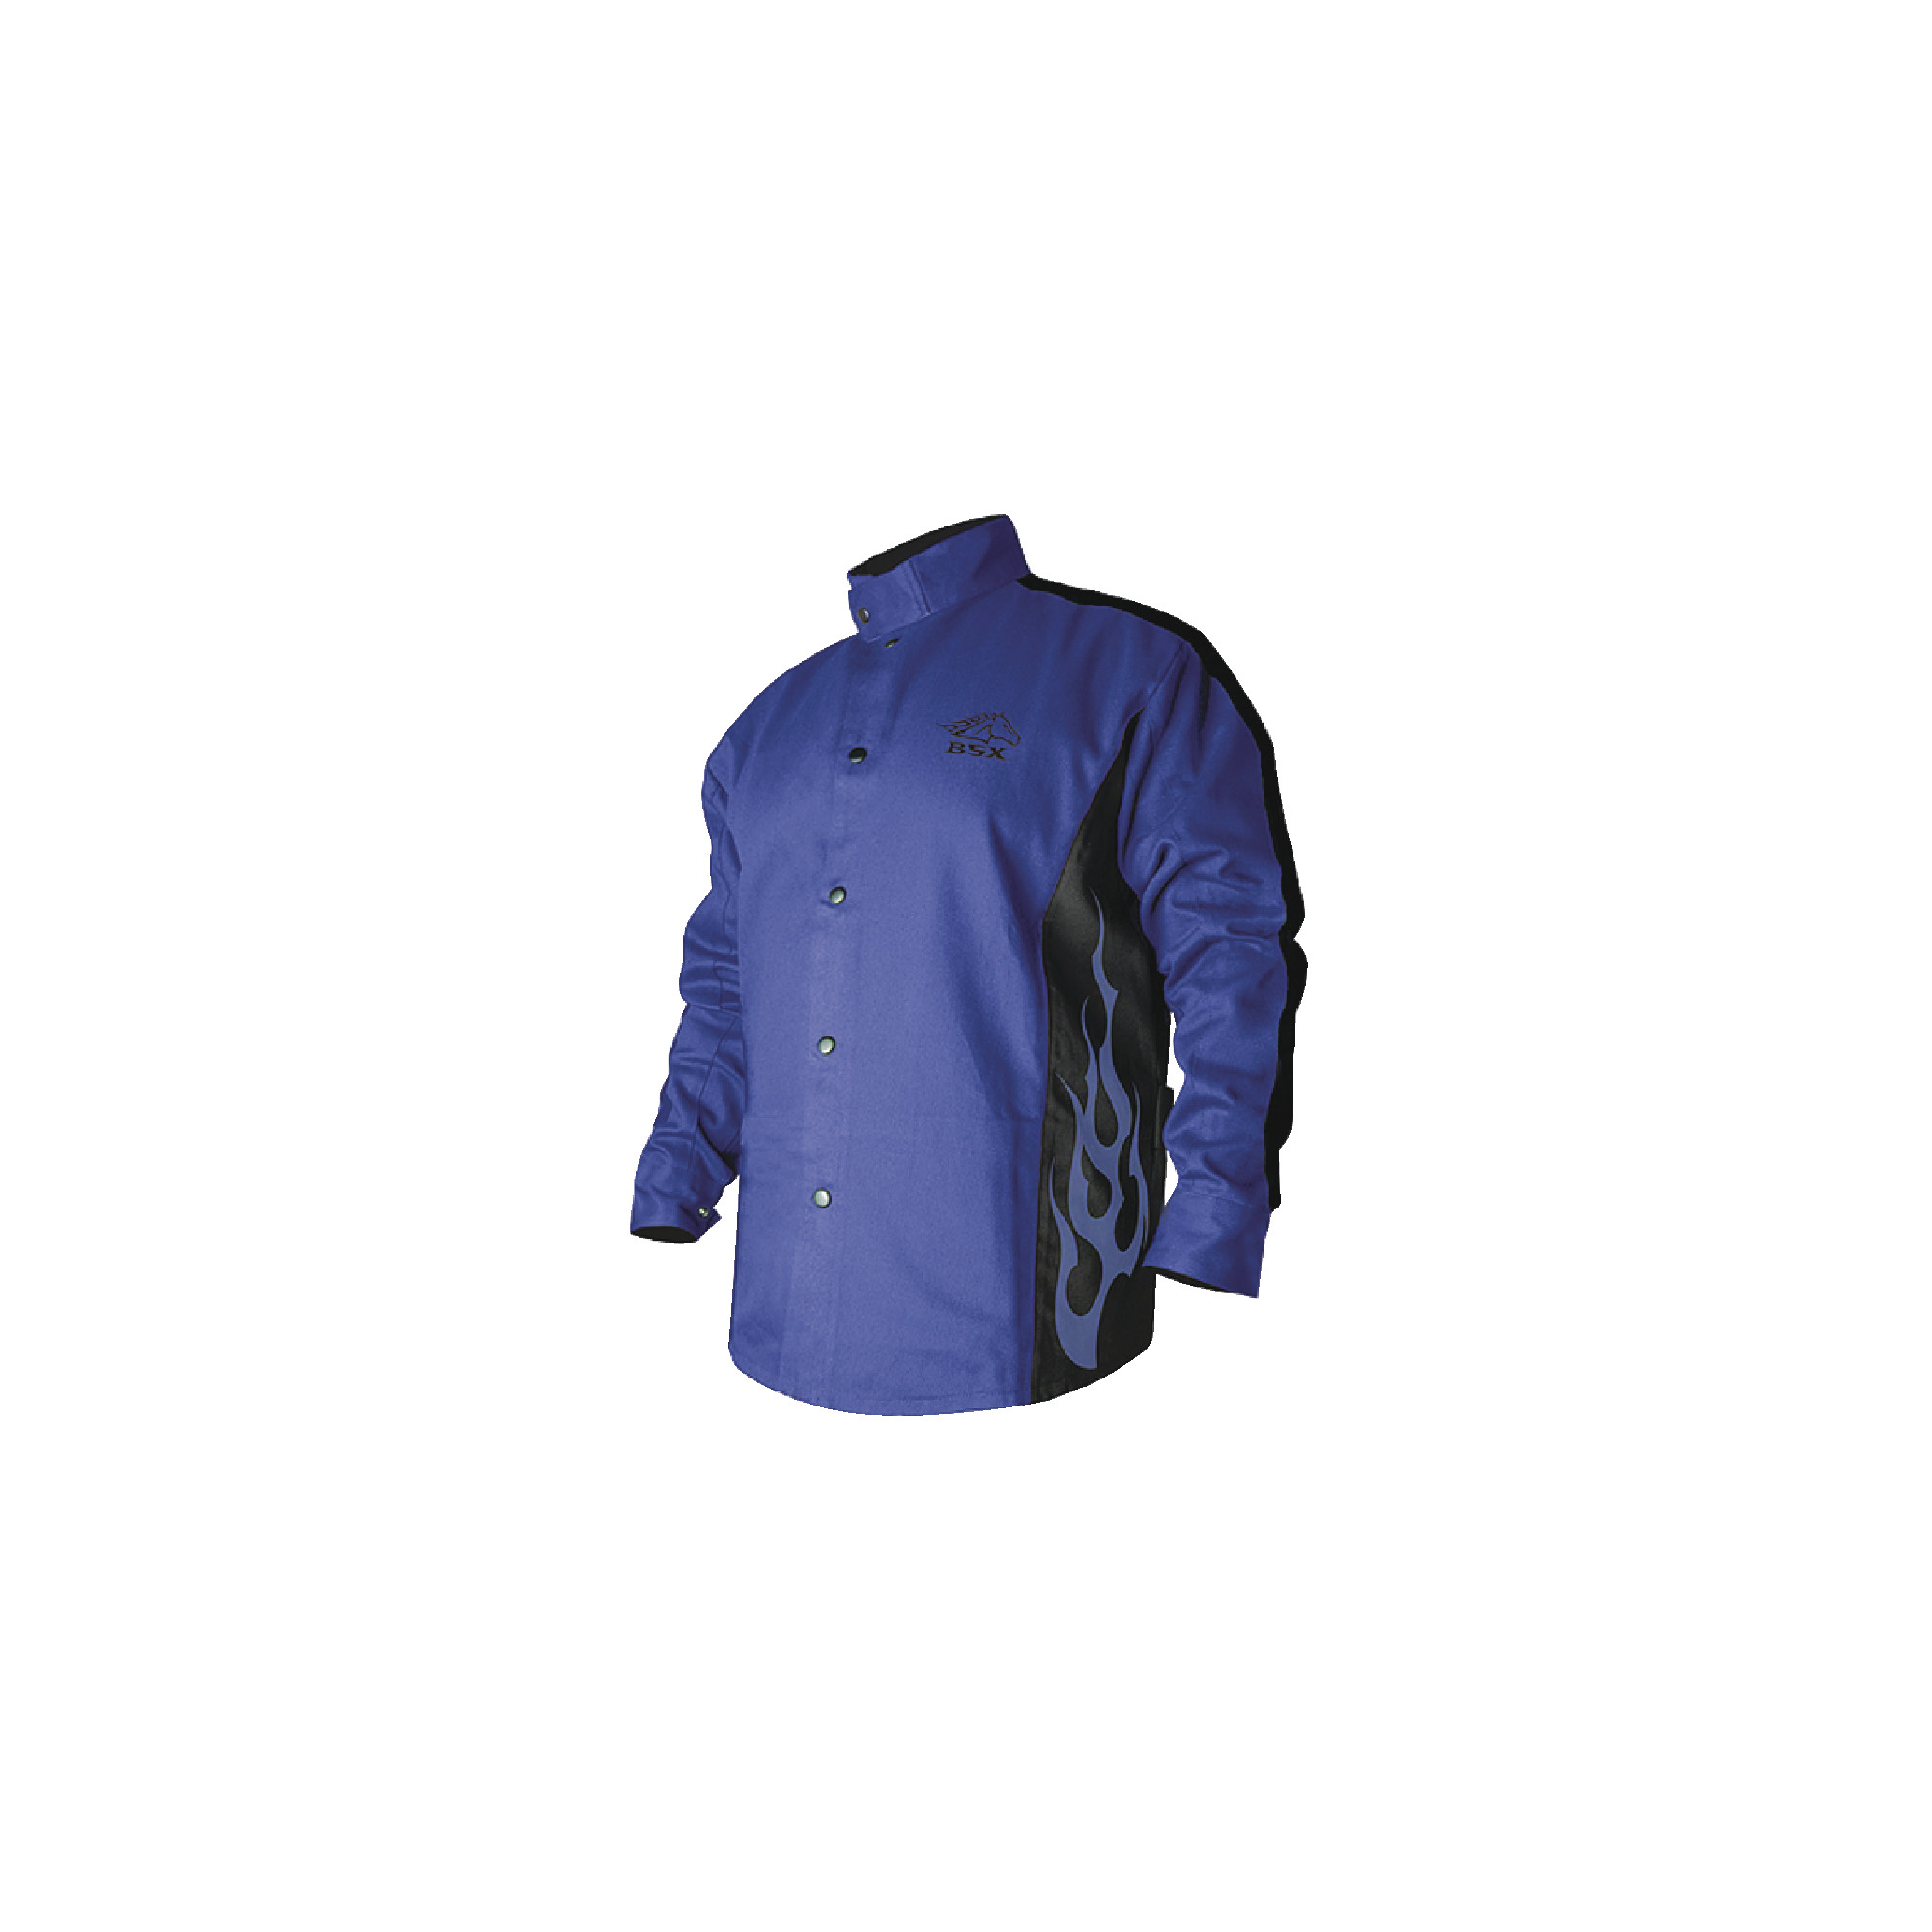 BSX Stryker Blue With Blue Flames Fire Resistant Welding Jacket - Size XXXL